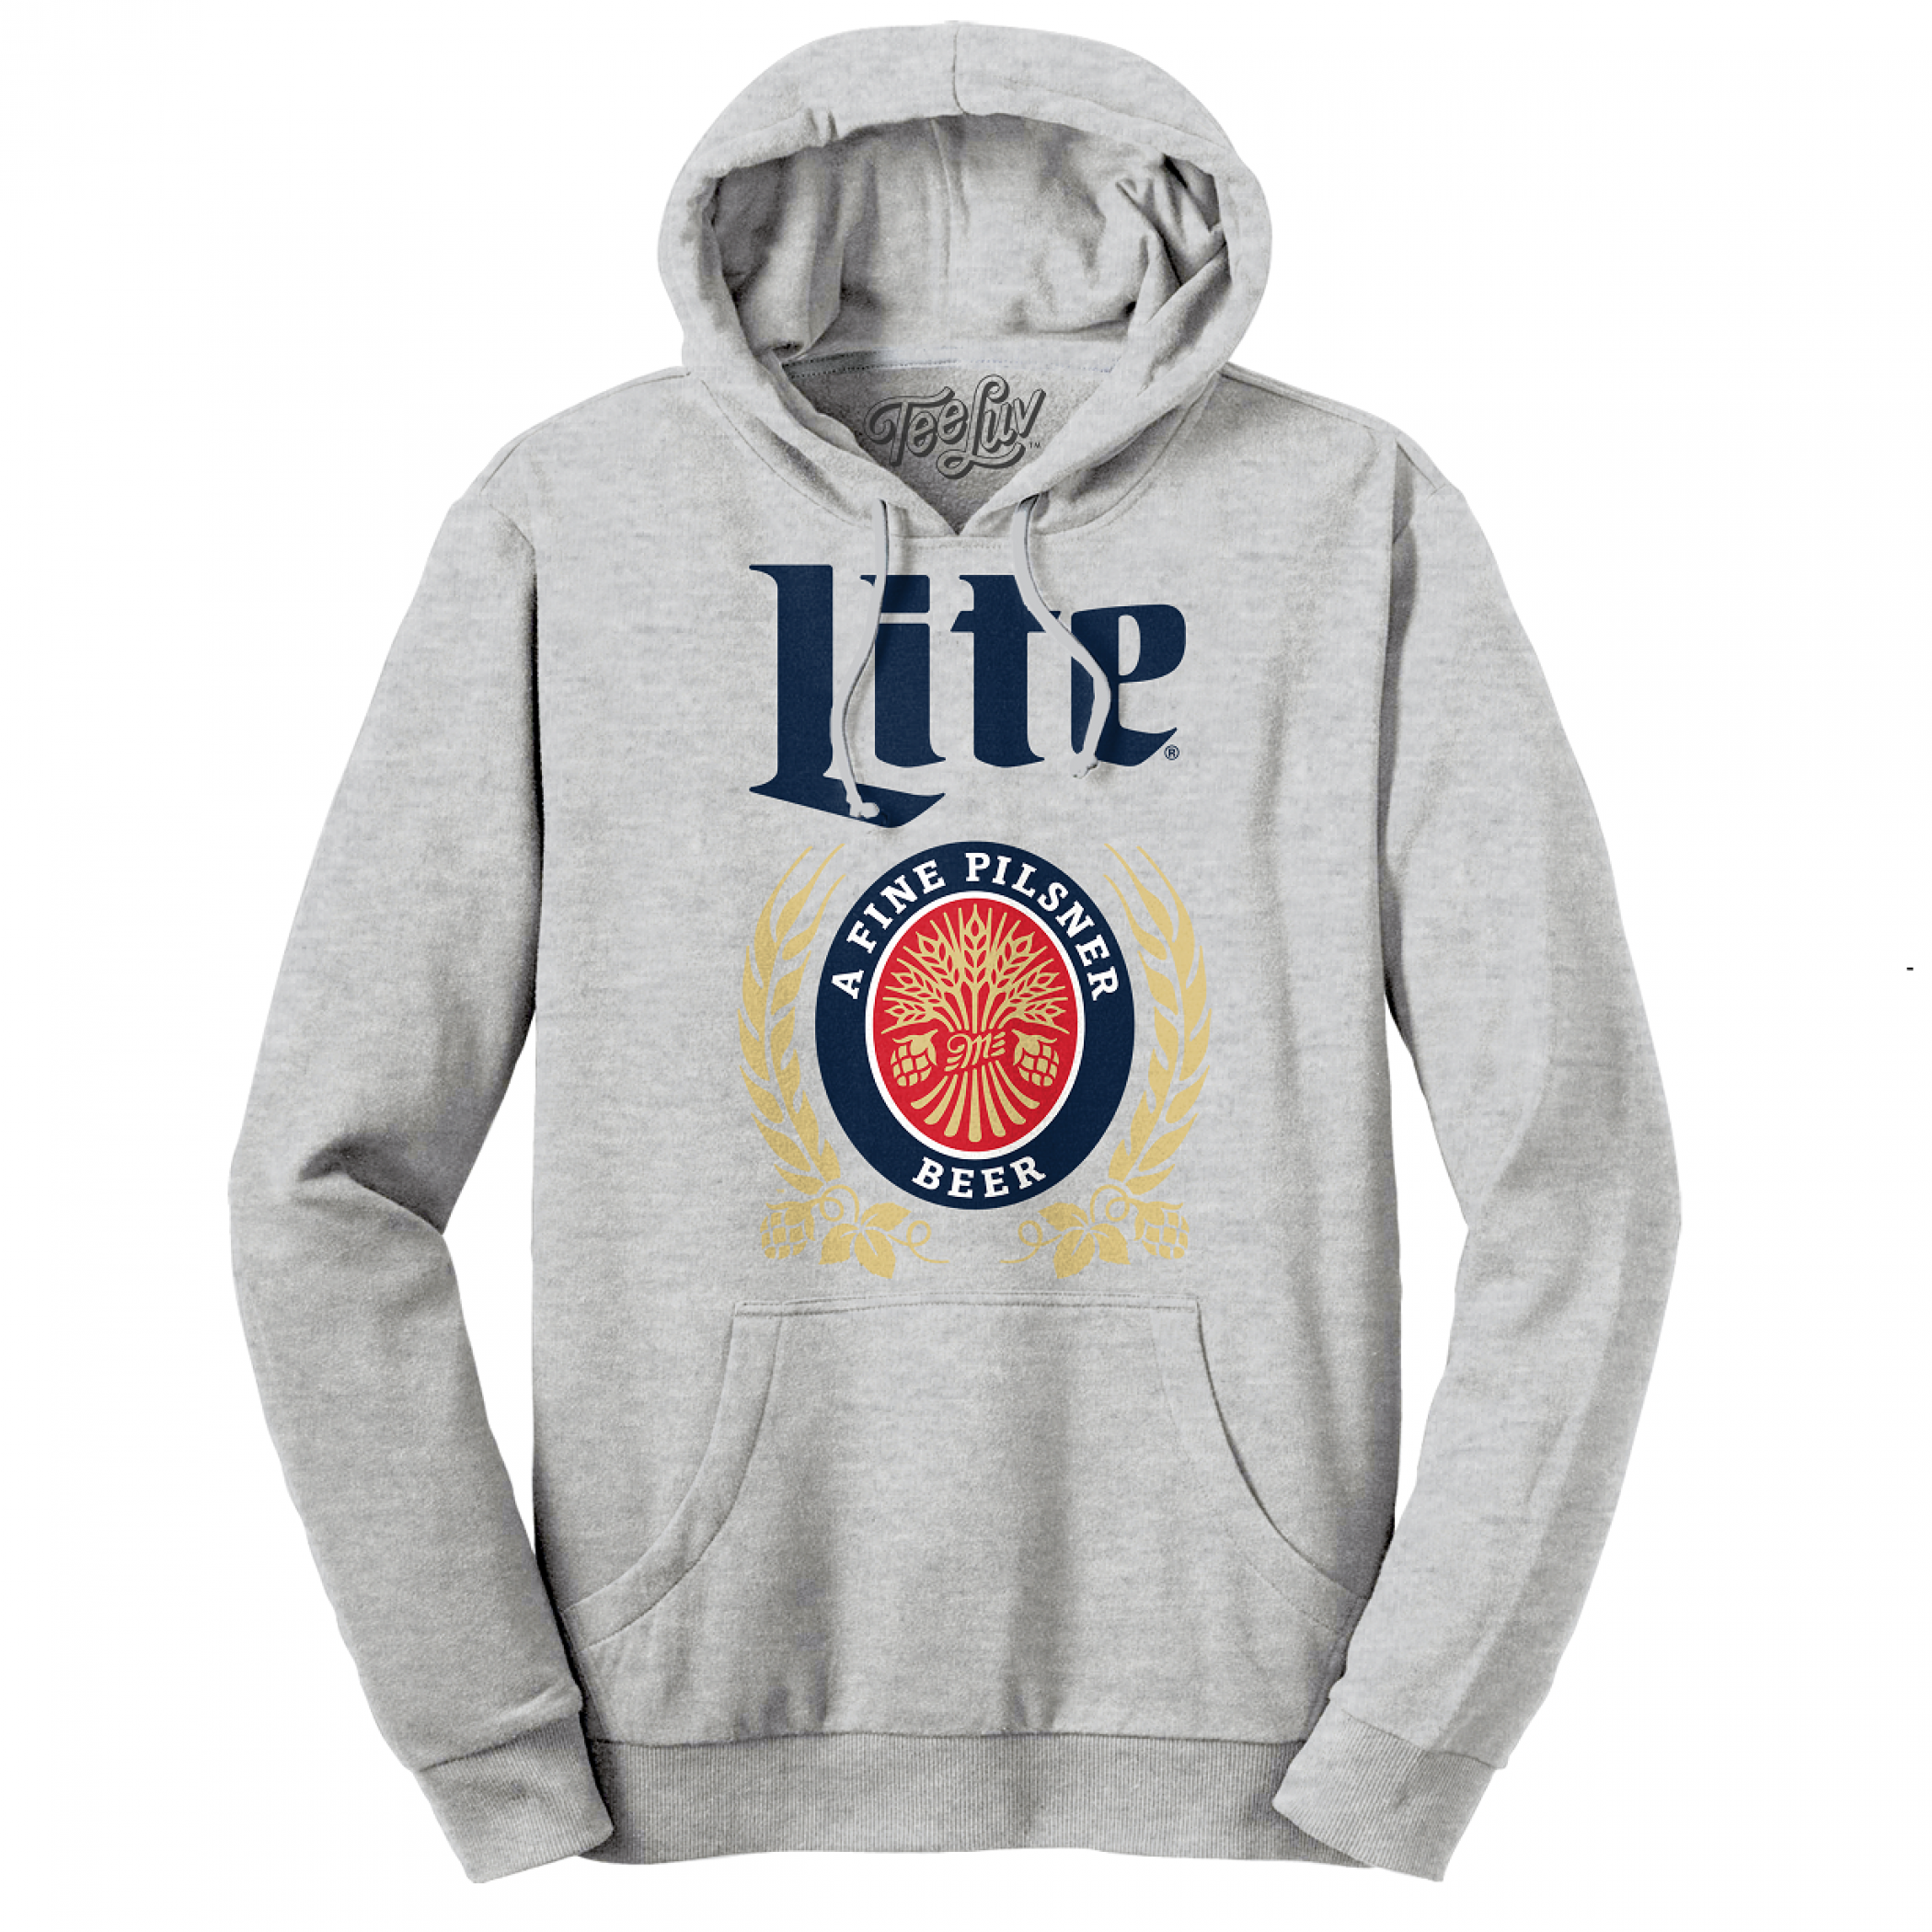 jkthtr rtgjrtg Sweatshirt Classic Miller-Coors-Beer-Logo Baseball Hoodies for Men